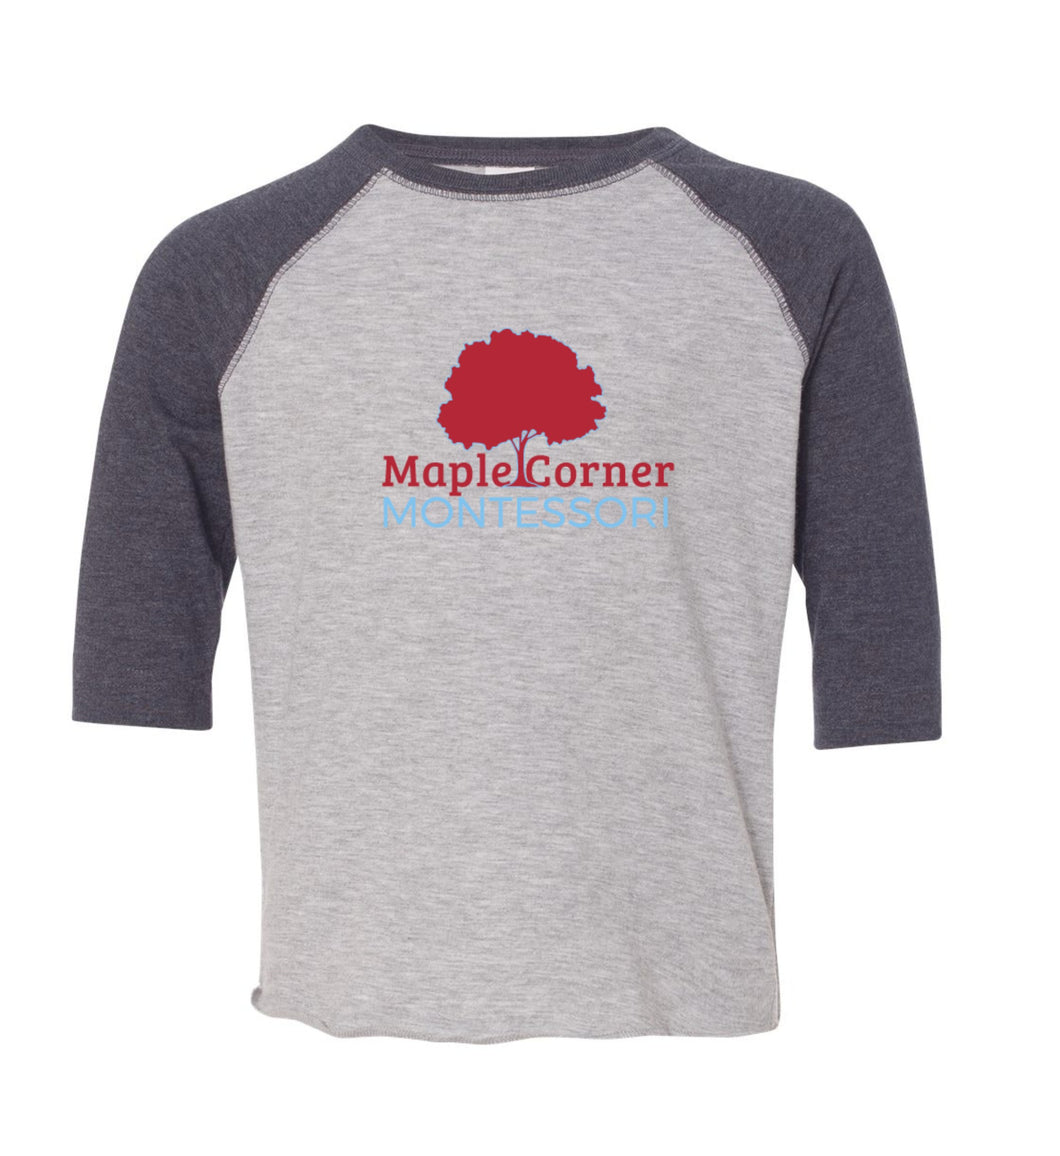 Maple Corner 3/4 Sleeve Toddler/Youth Shirt